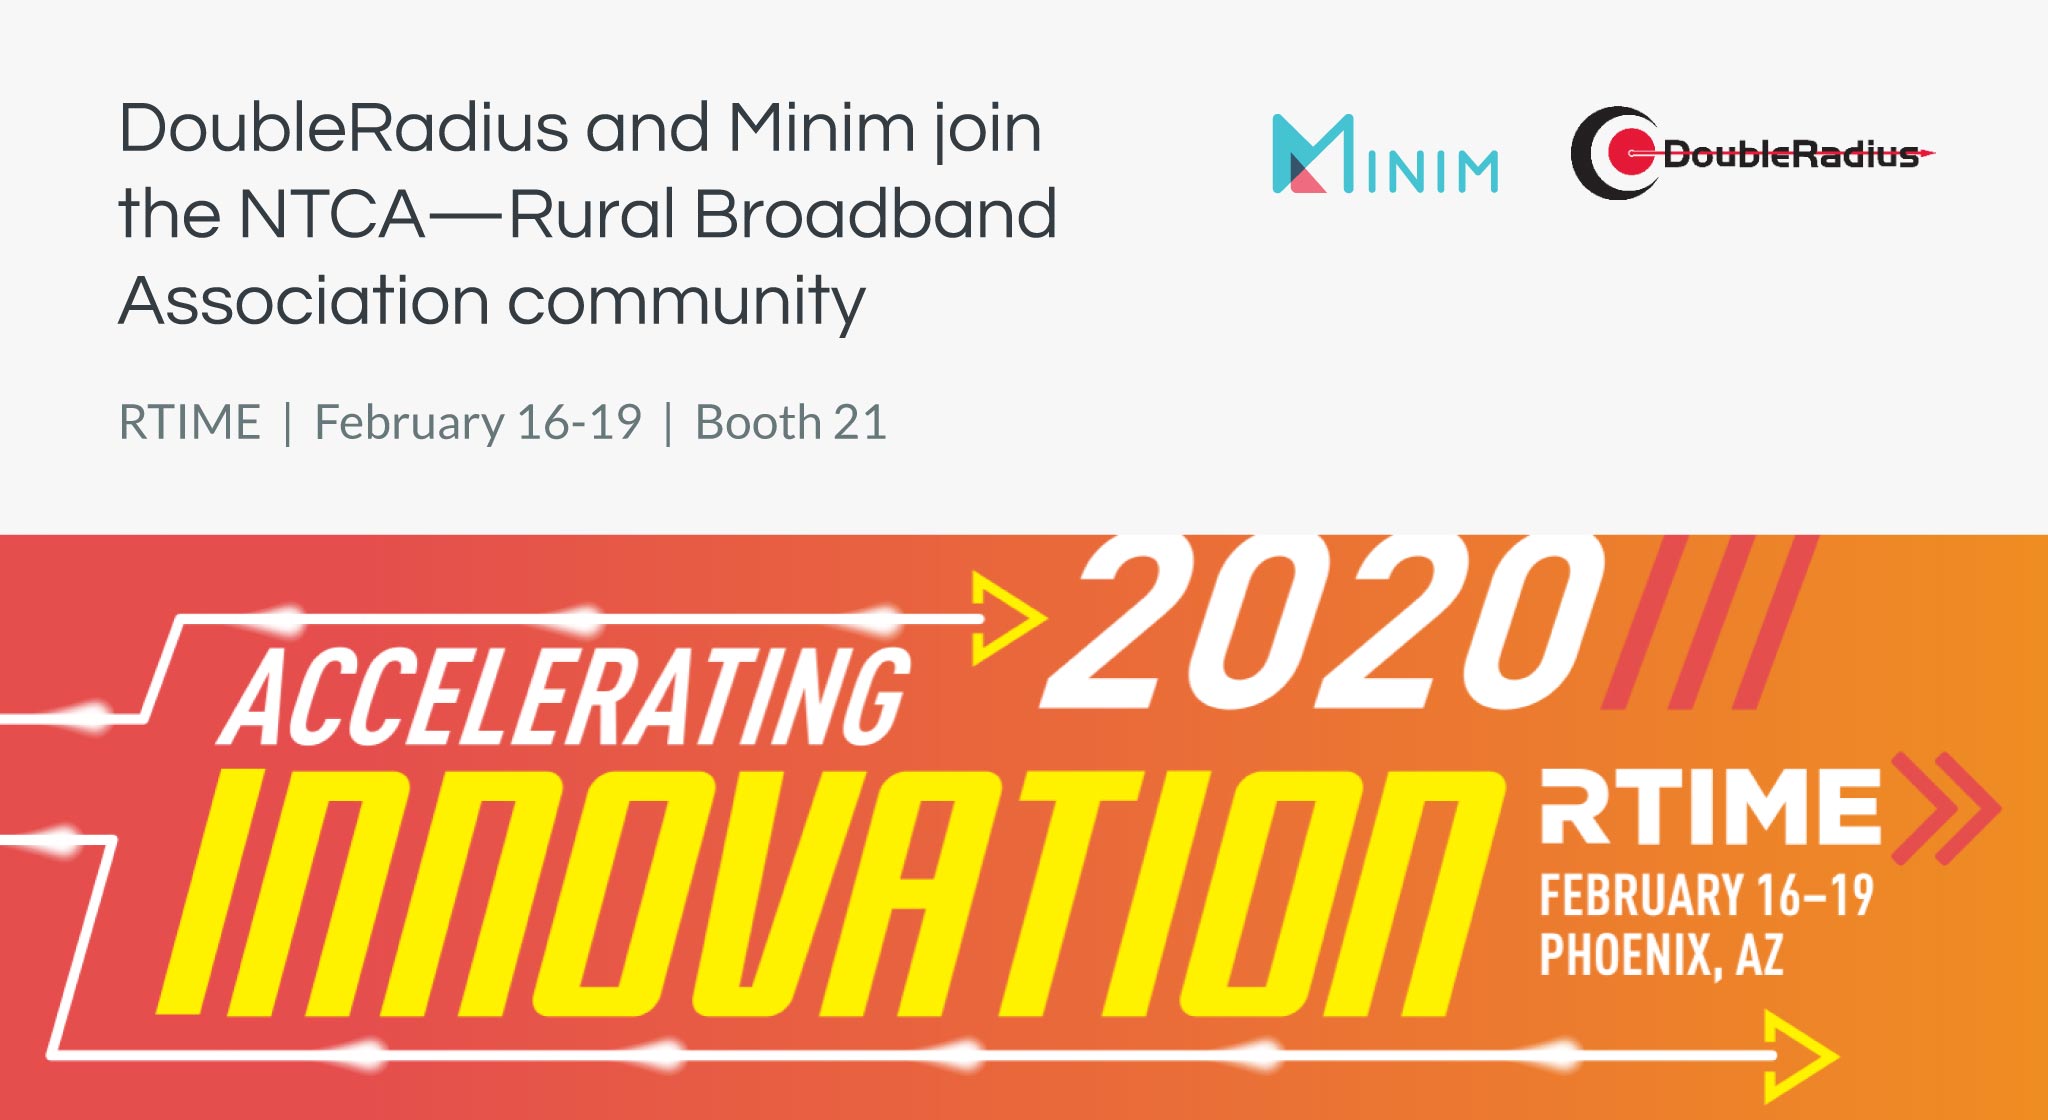 DoubleRadius and Minim join the NTCA—Rural Broadband Association community